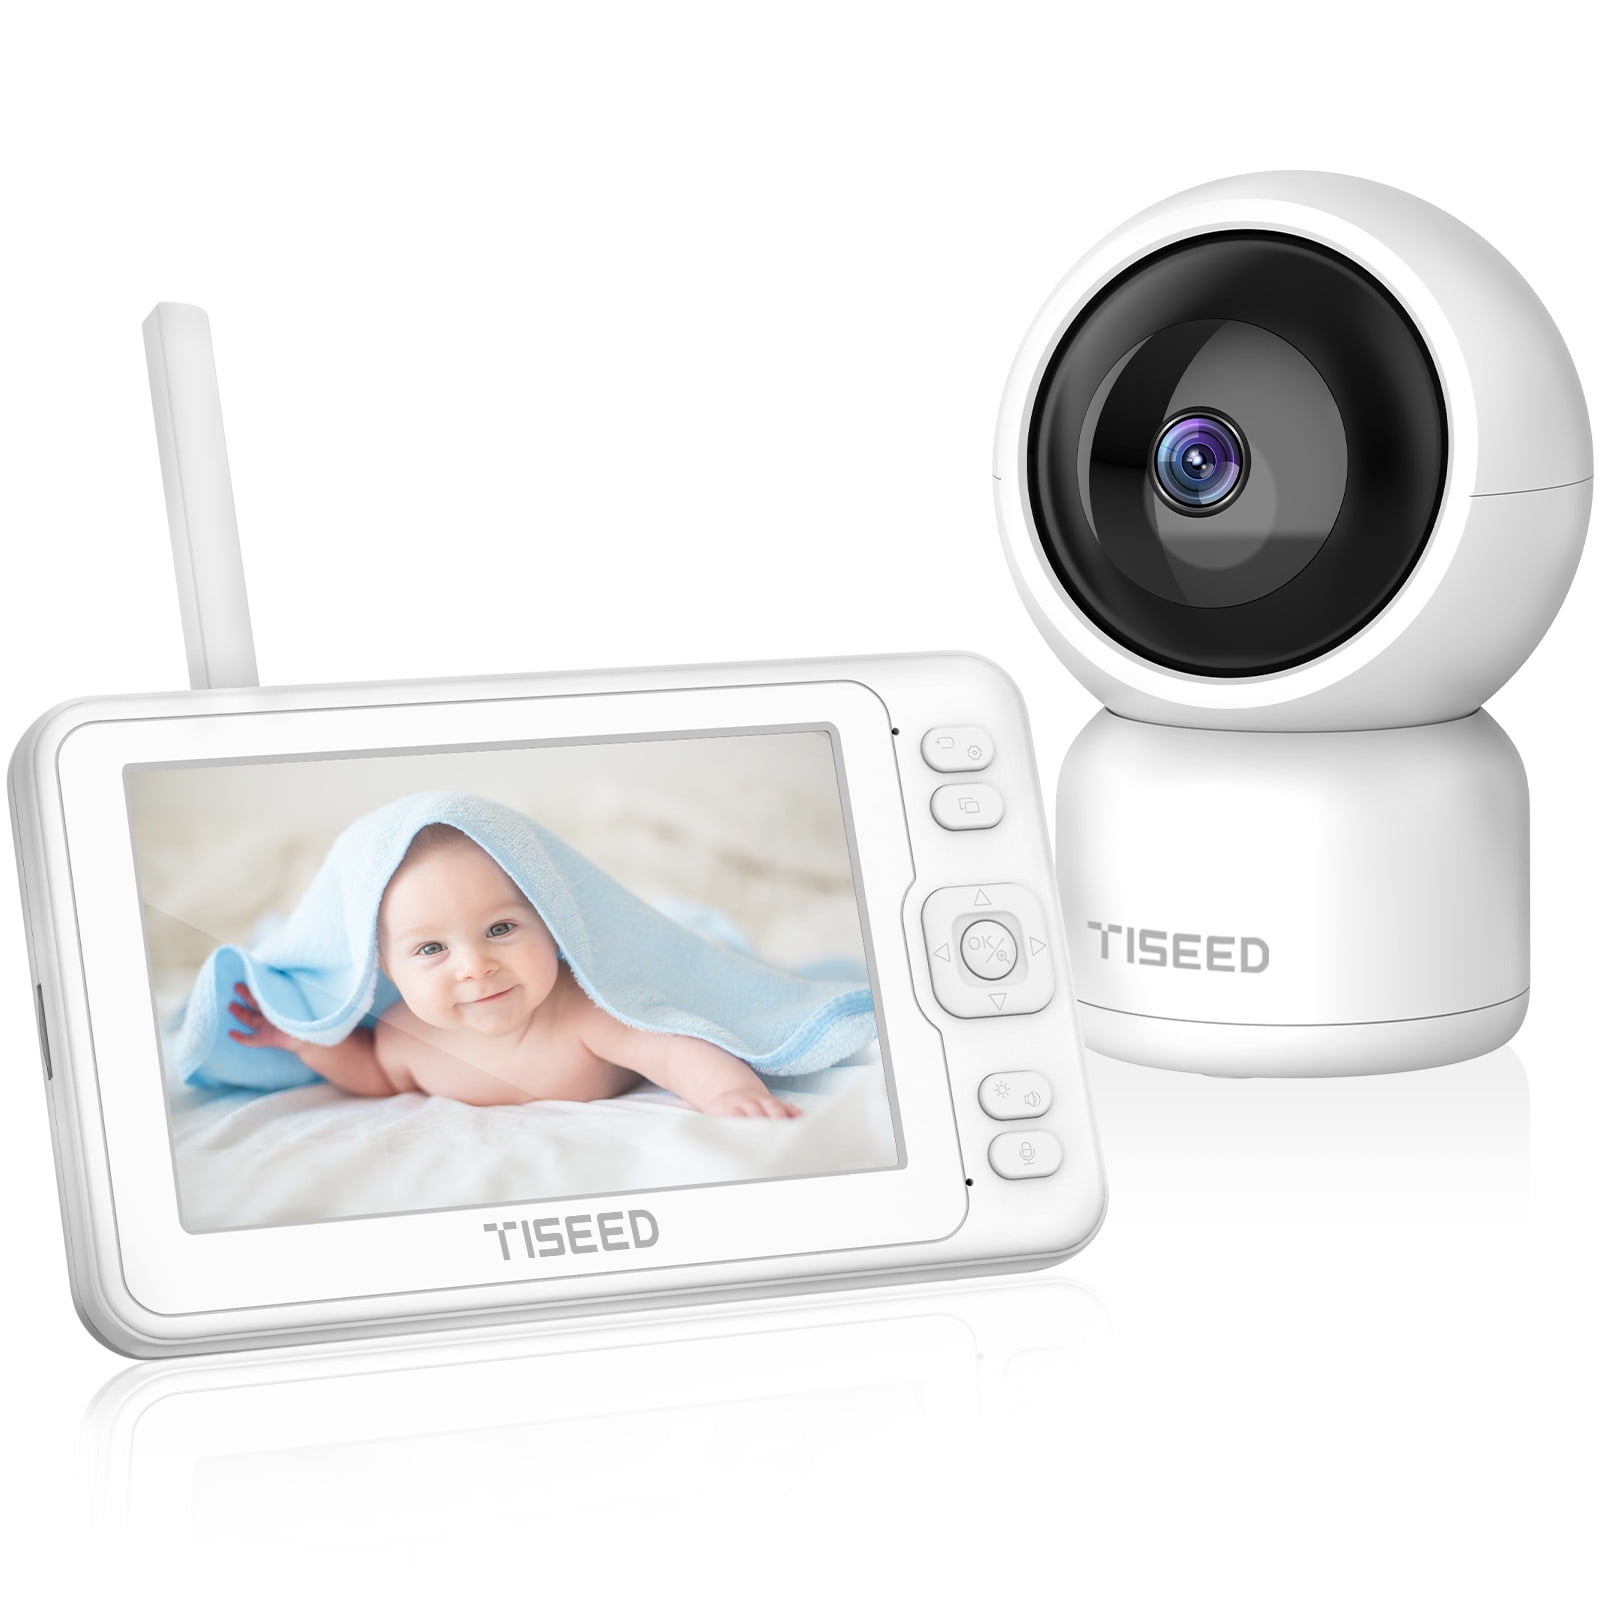 BOIFUN Baby Video Camera with Night Vision Temperature Monitor - White